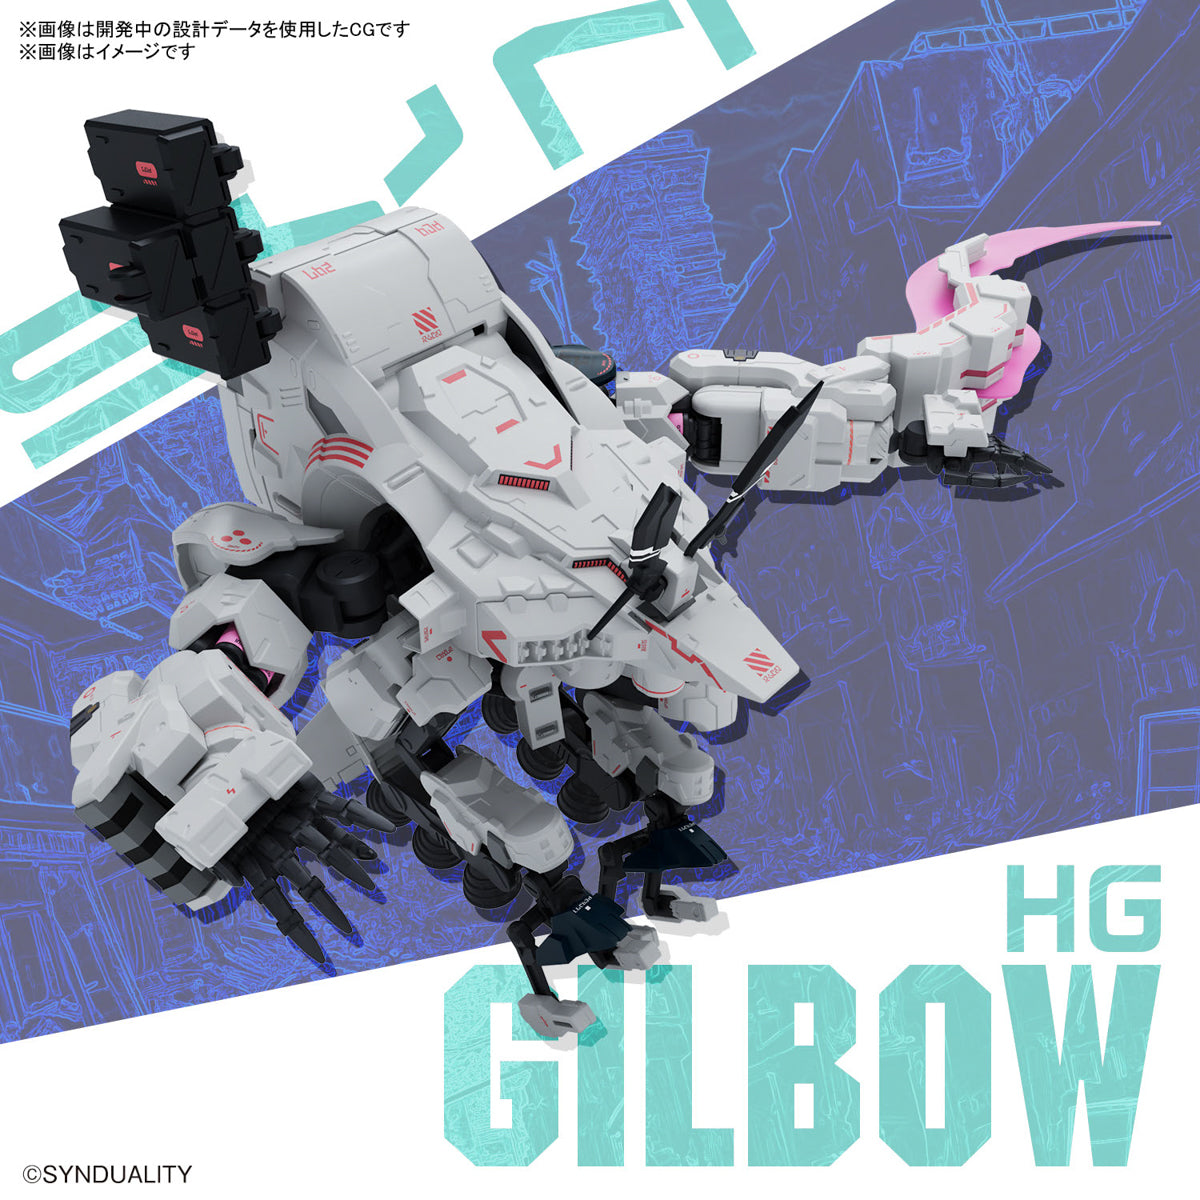 Bandai® High Grade Synduality Plastic Model Kits Series HG GILBOW